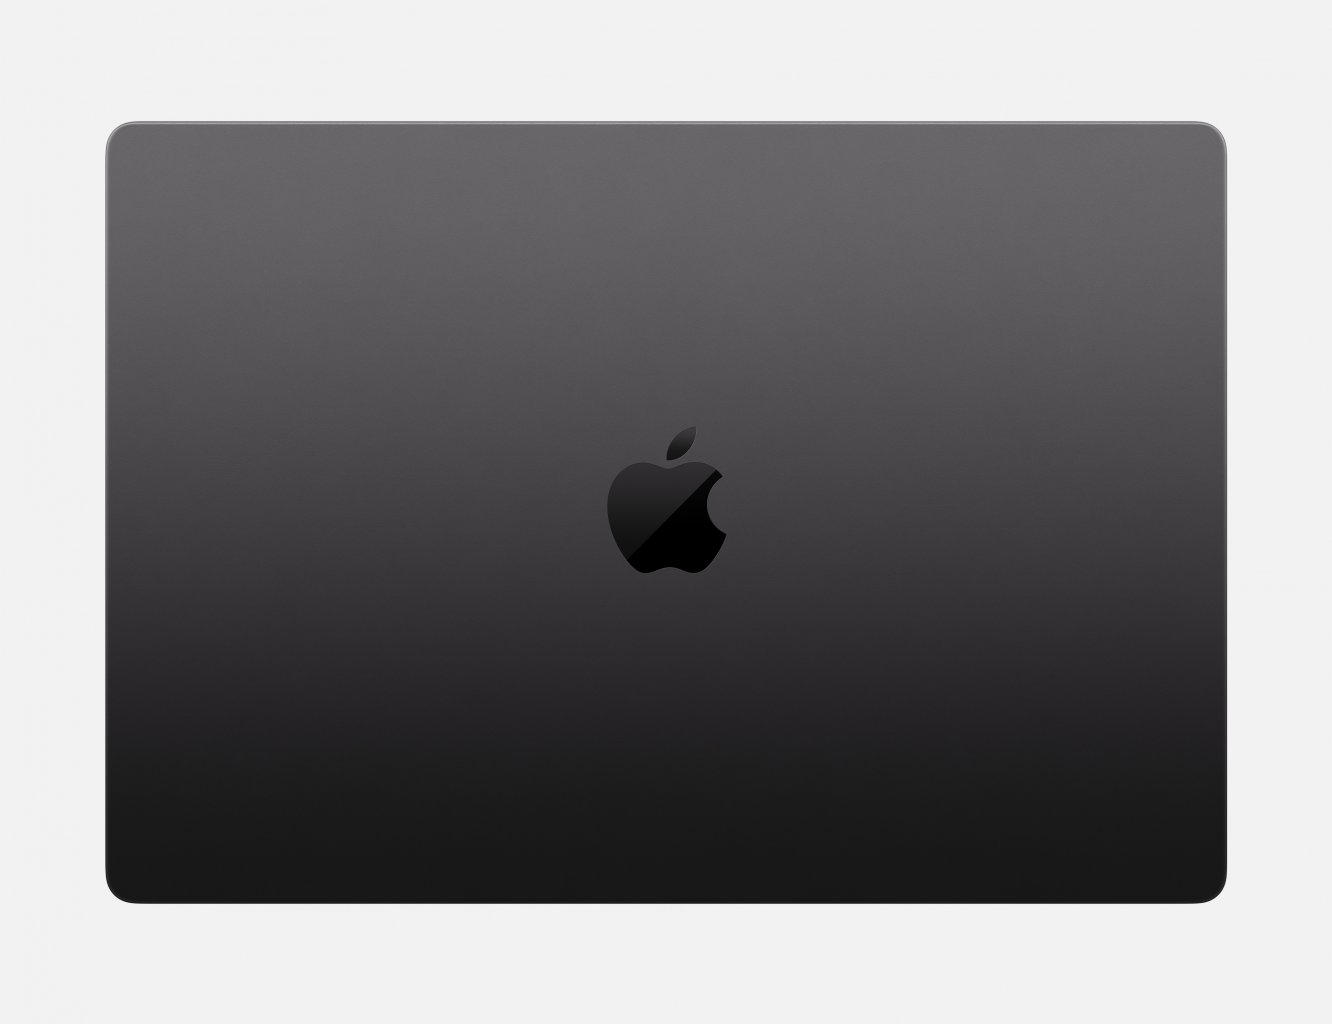 Photo 1 of MacBook Pro in Space Black